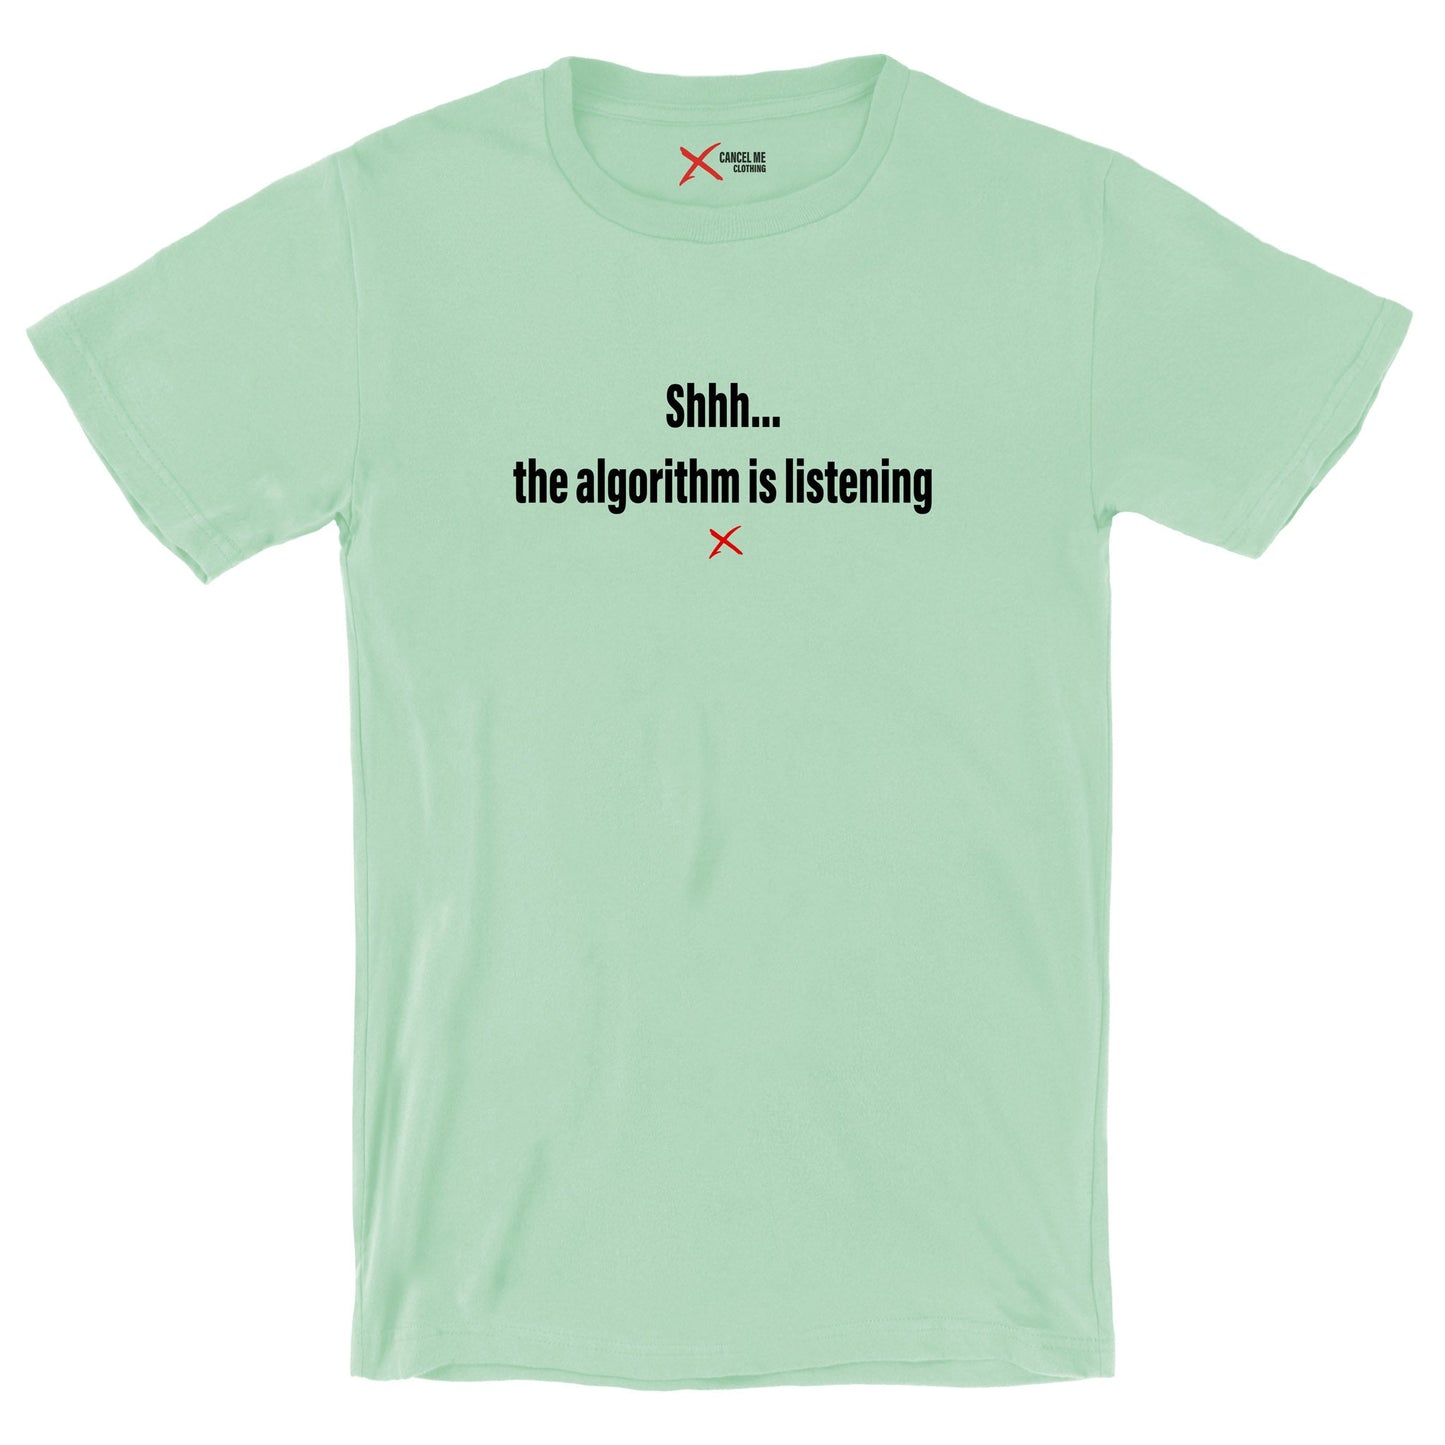 Shhh... the algorithm is listening - Shirt